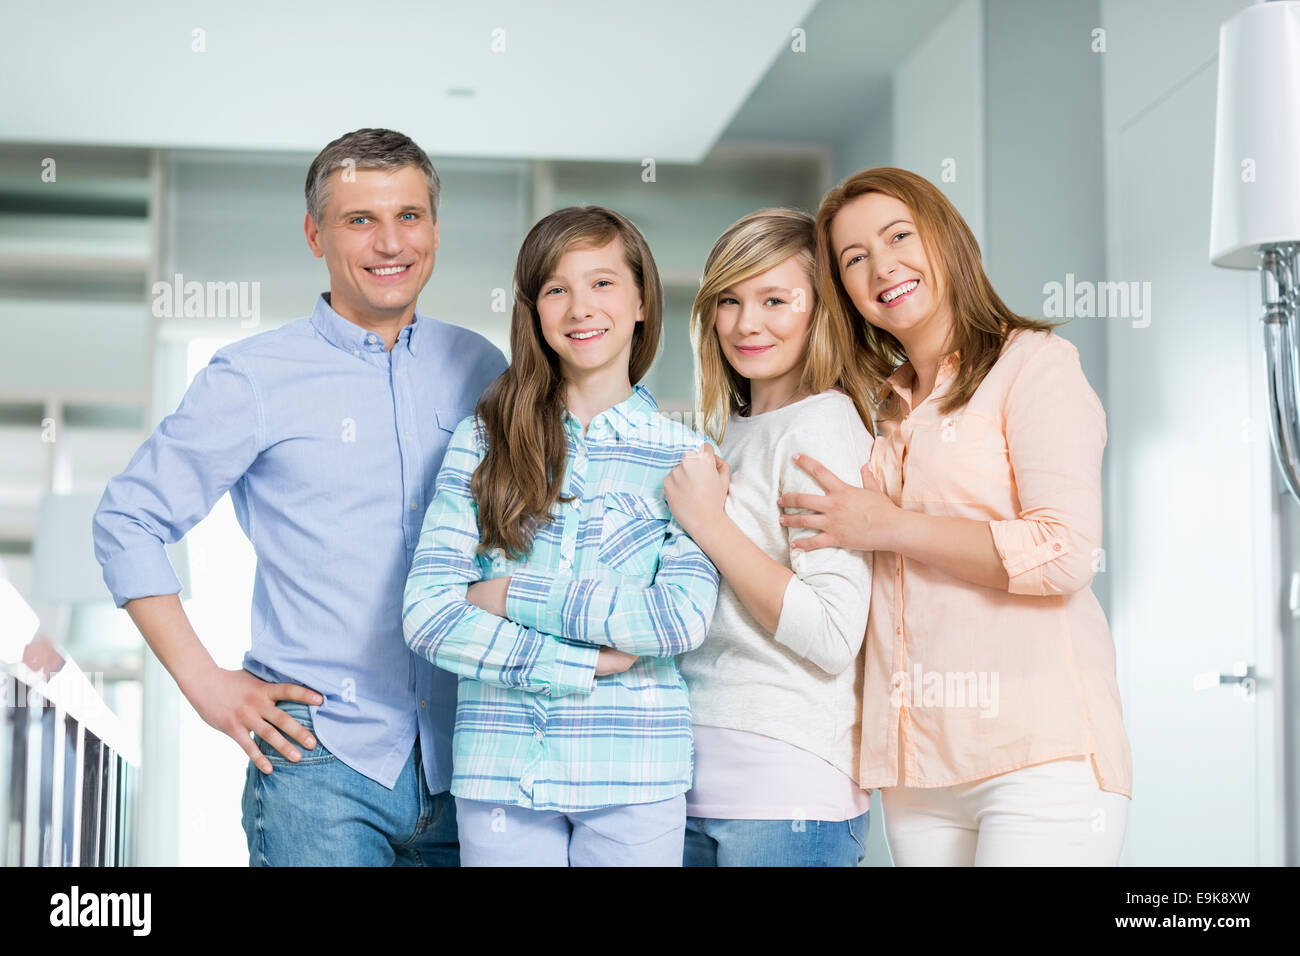 Portrait de famille avec enfants Standing together at home Banque D'Images